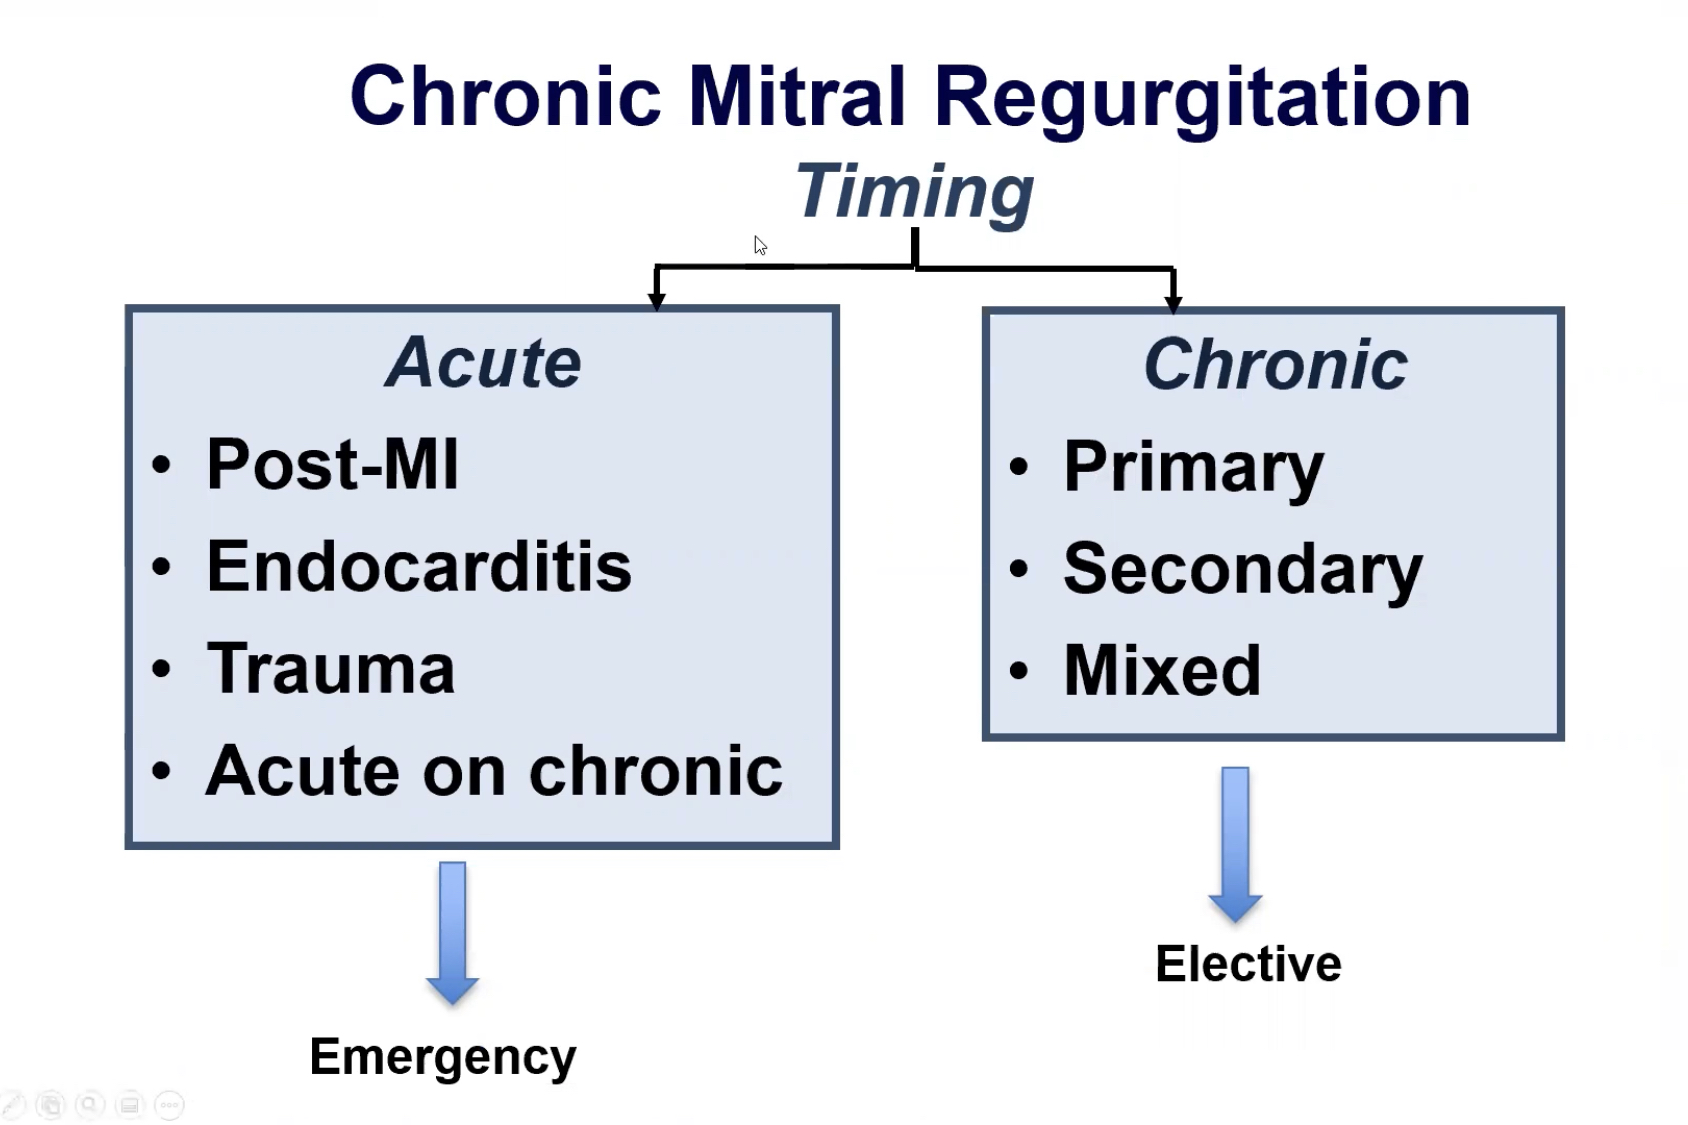 Etiologies of chronic mitral regurgitation (MR)- acute and chronic